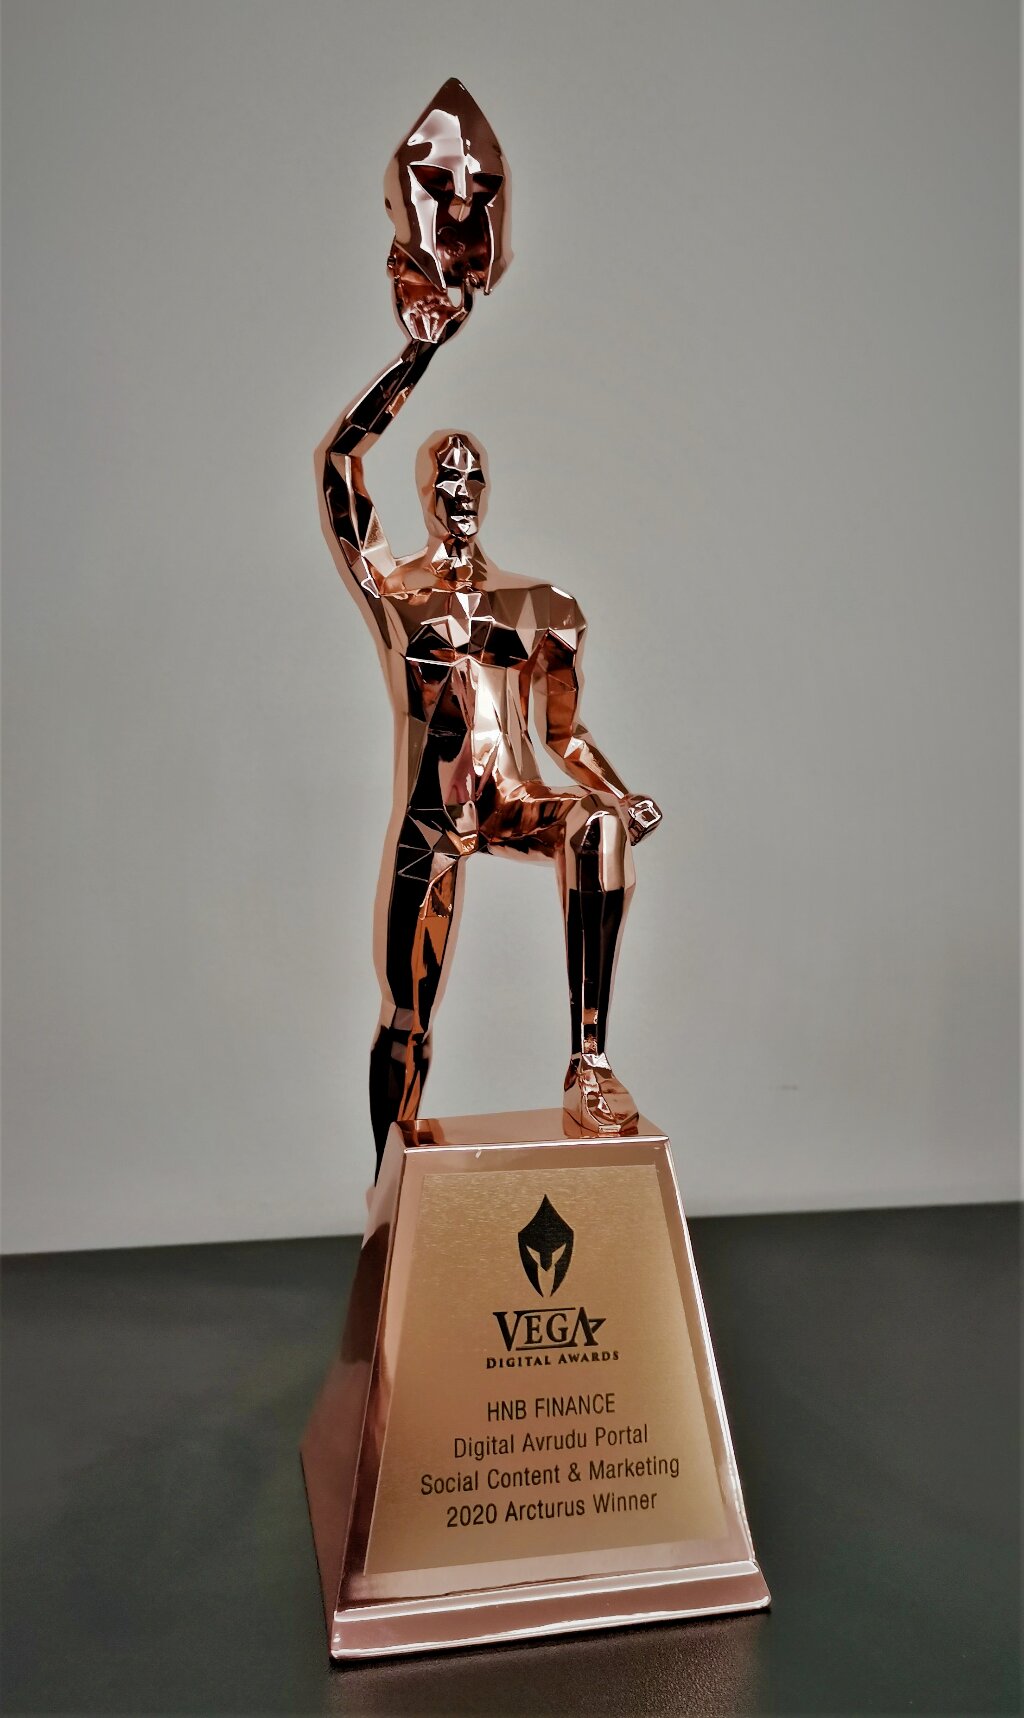 Image 2_HNB FINANCE's Vega Digital Award